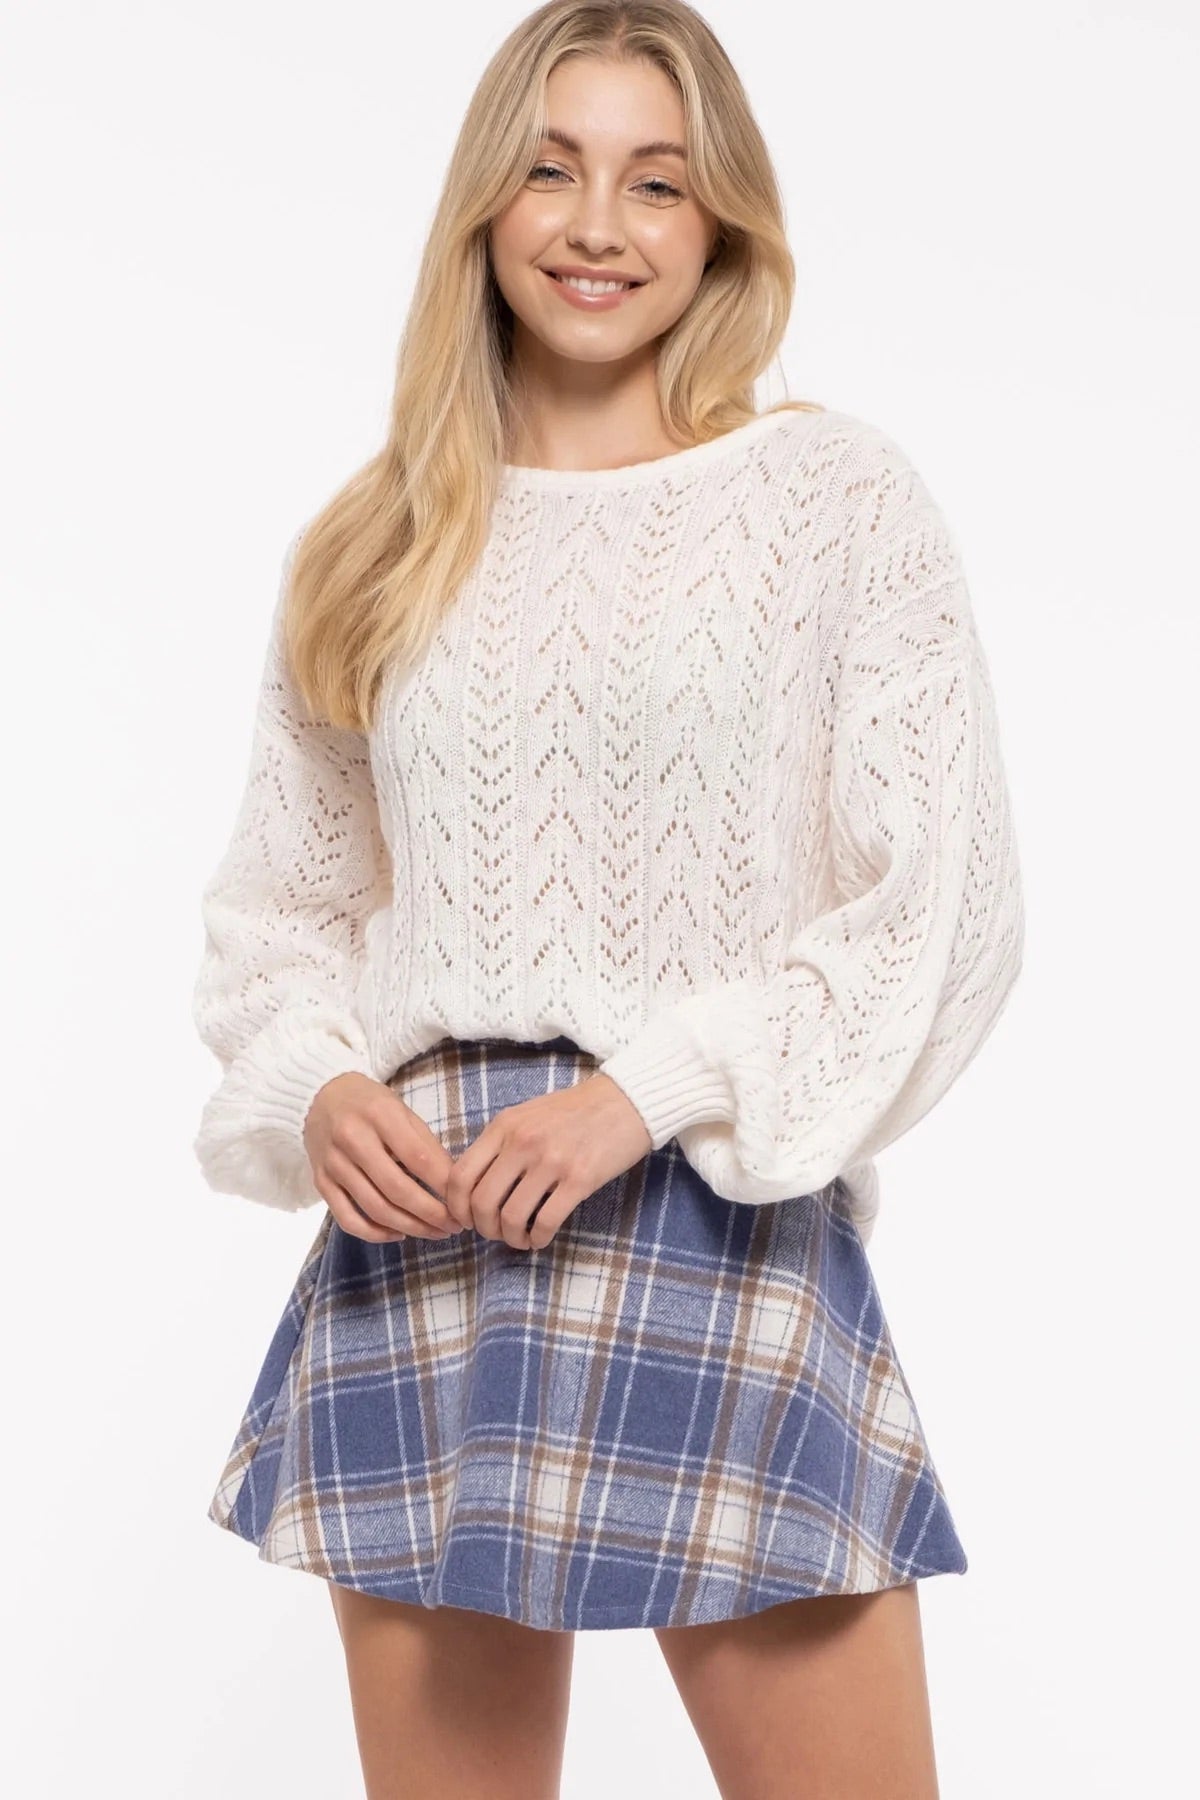 Eyelet Knit Sweater - Lark & Lily Boutique